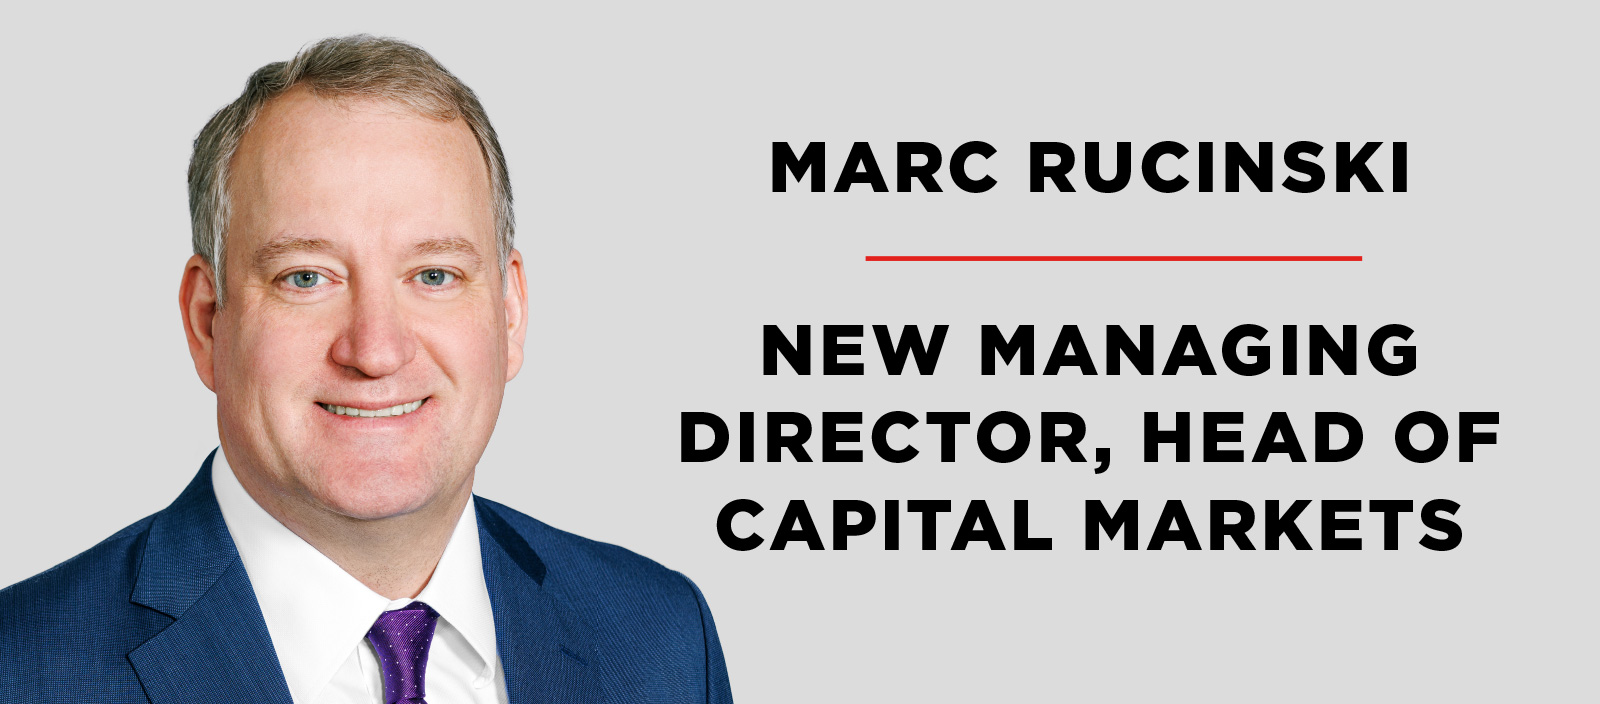 Marc Rucinski - New Managing Director, Head of Capital Markets